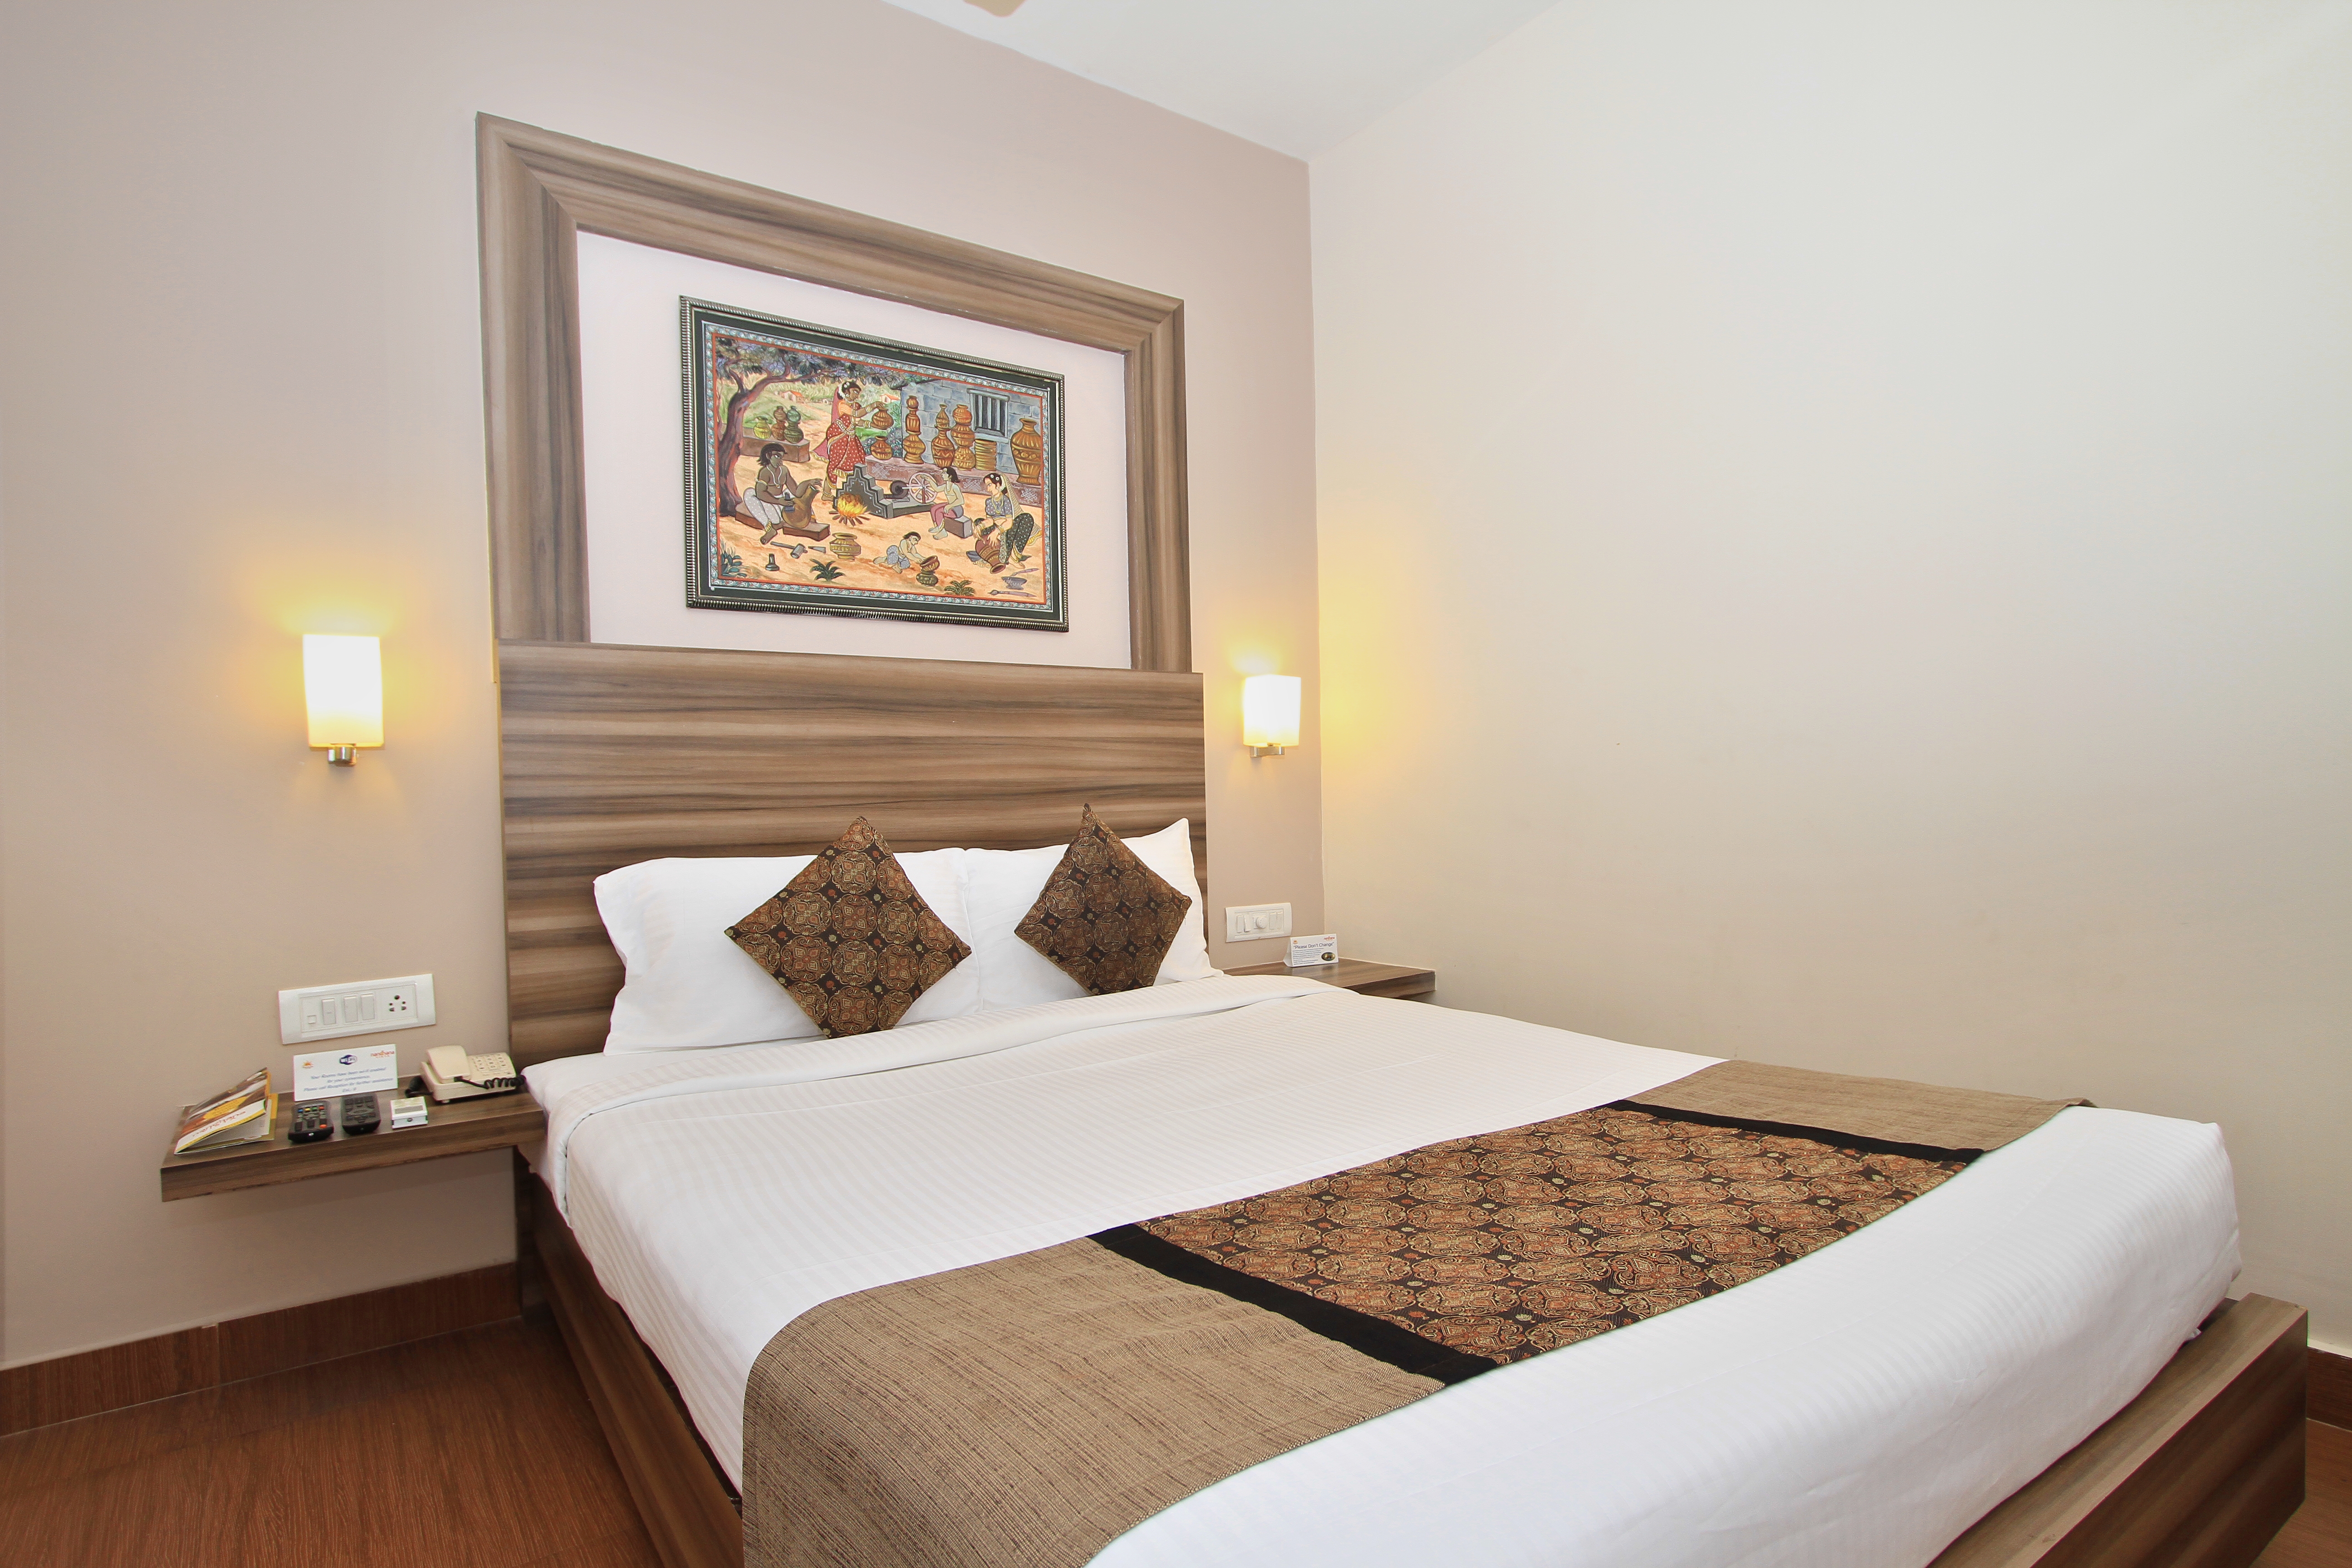 STANDARD ROOM, LA SARA VISTA, KAMMANAHALLI, budget hotel in Bangalore 3